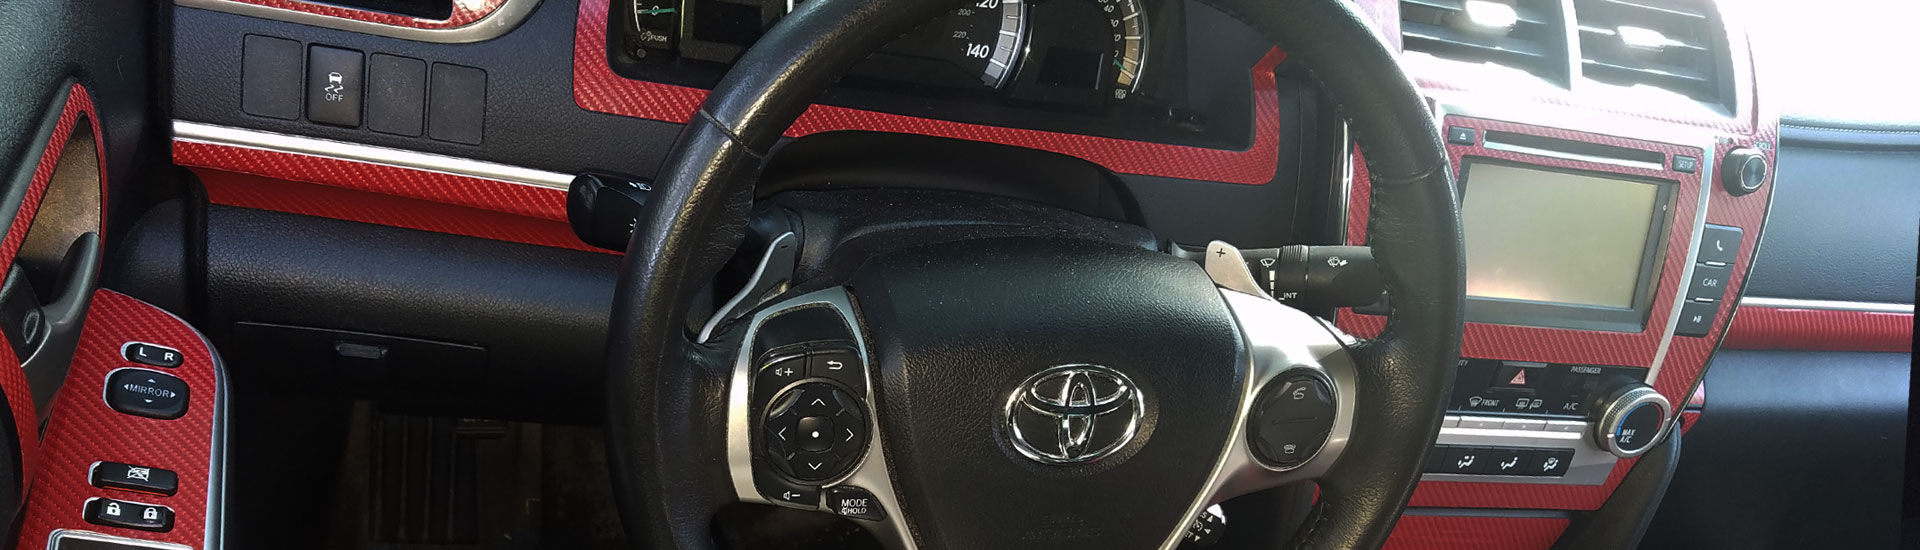 2014 Toyota Camry Custom Dash Kits